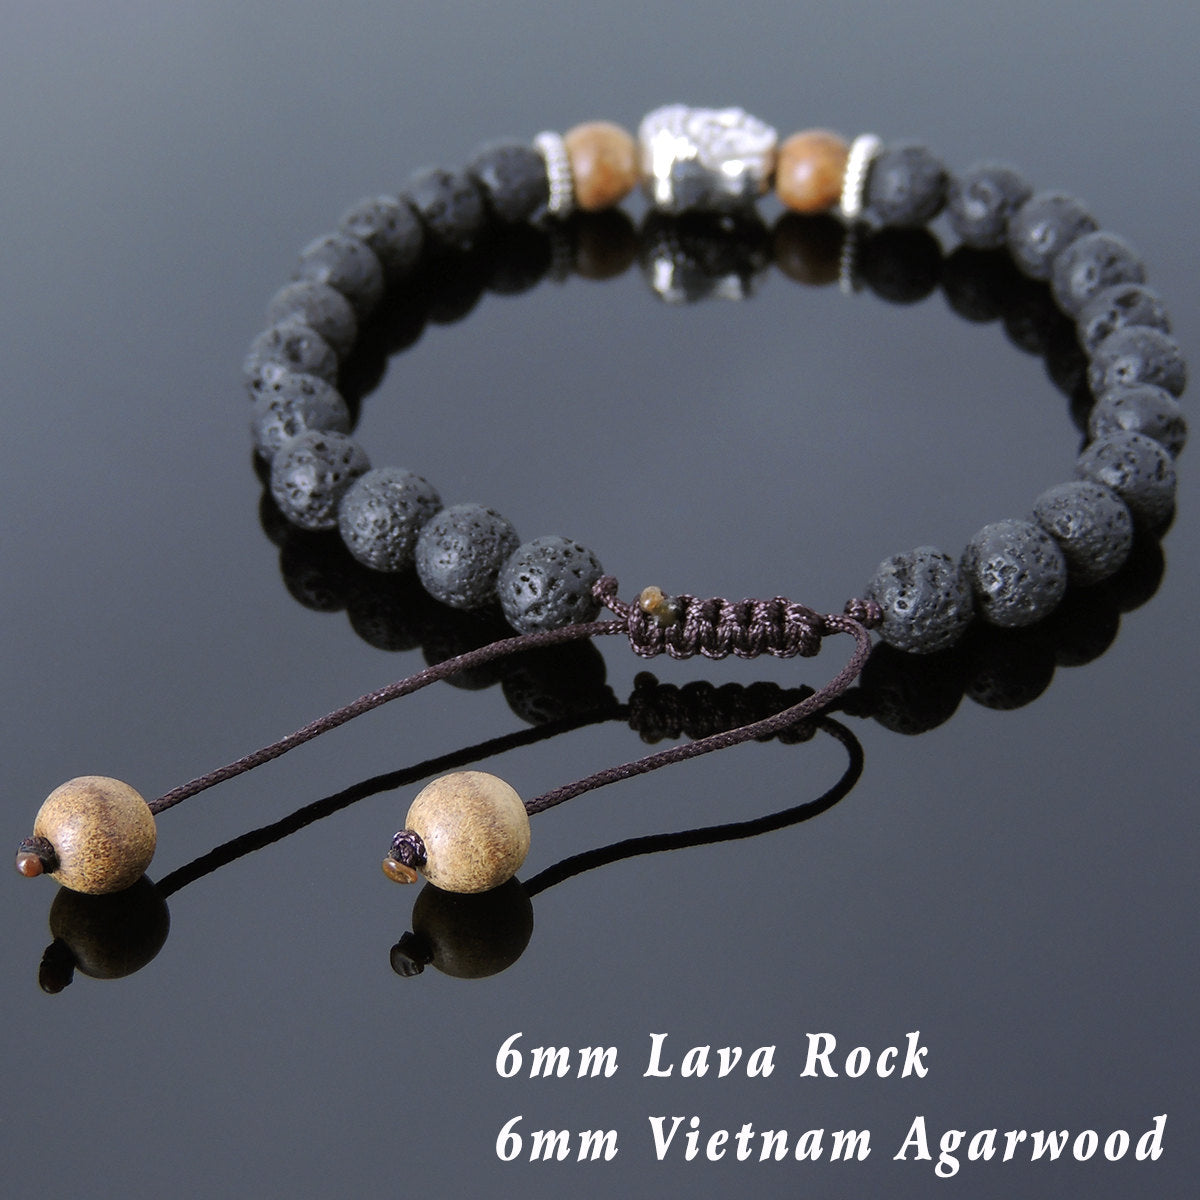 6mm Lava Rock & Agarwood Braided Adjustable Meditation Bracelet with Tibetan Silver Spacers & Sakyamuni Buddha Bead - Handmade by Gem & Silver TSB225